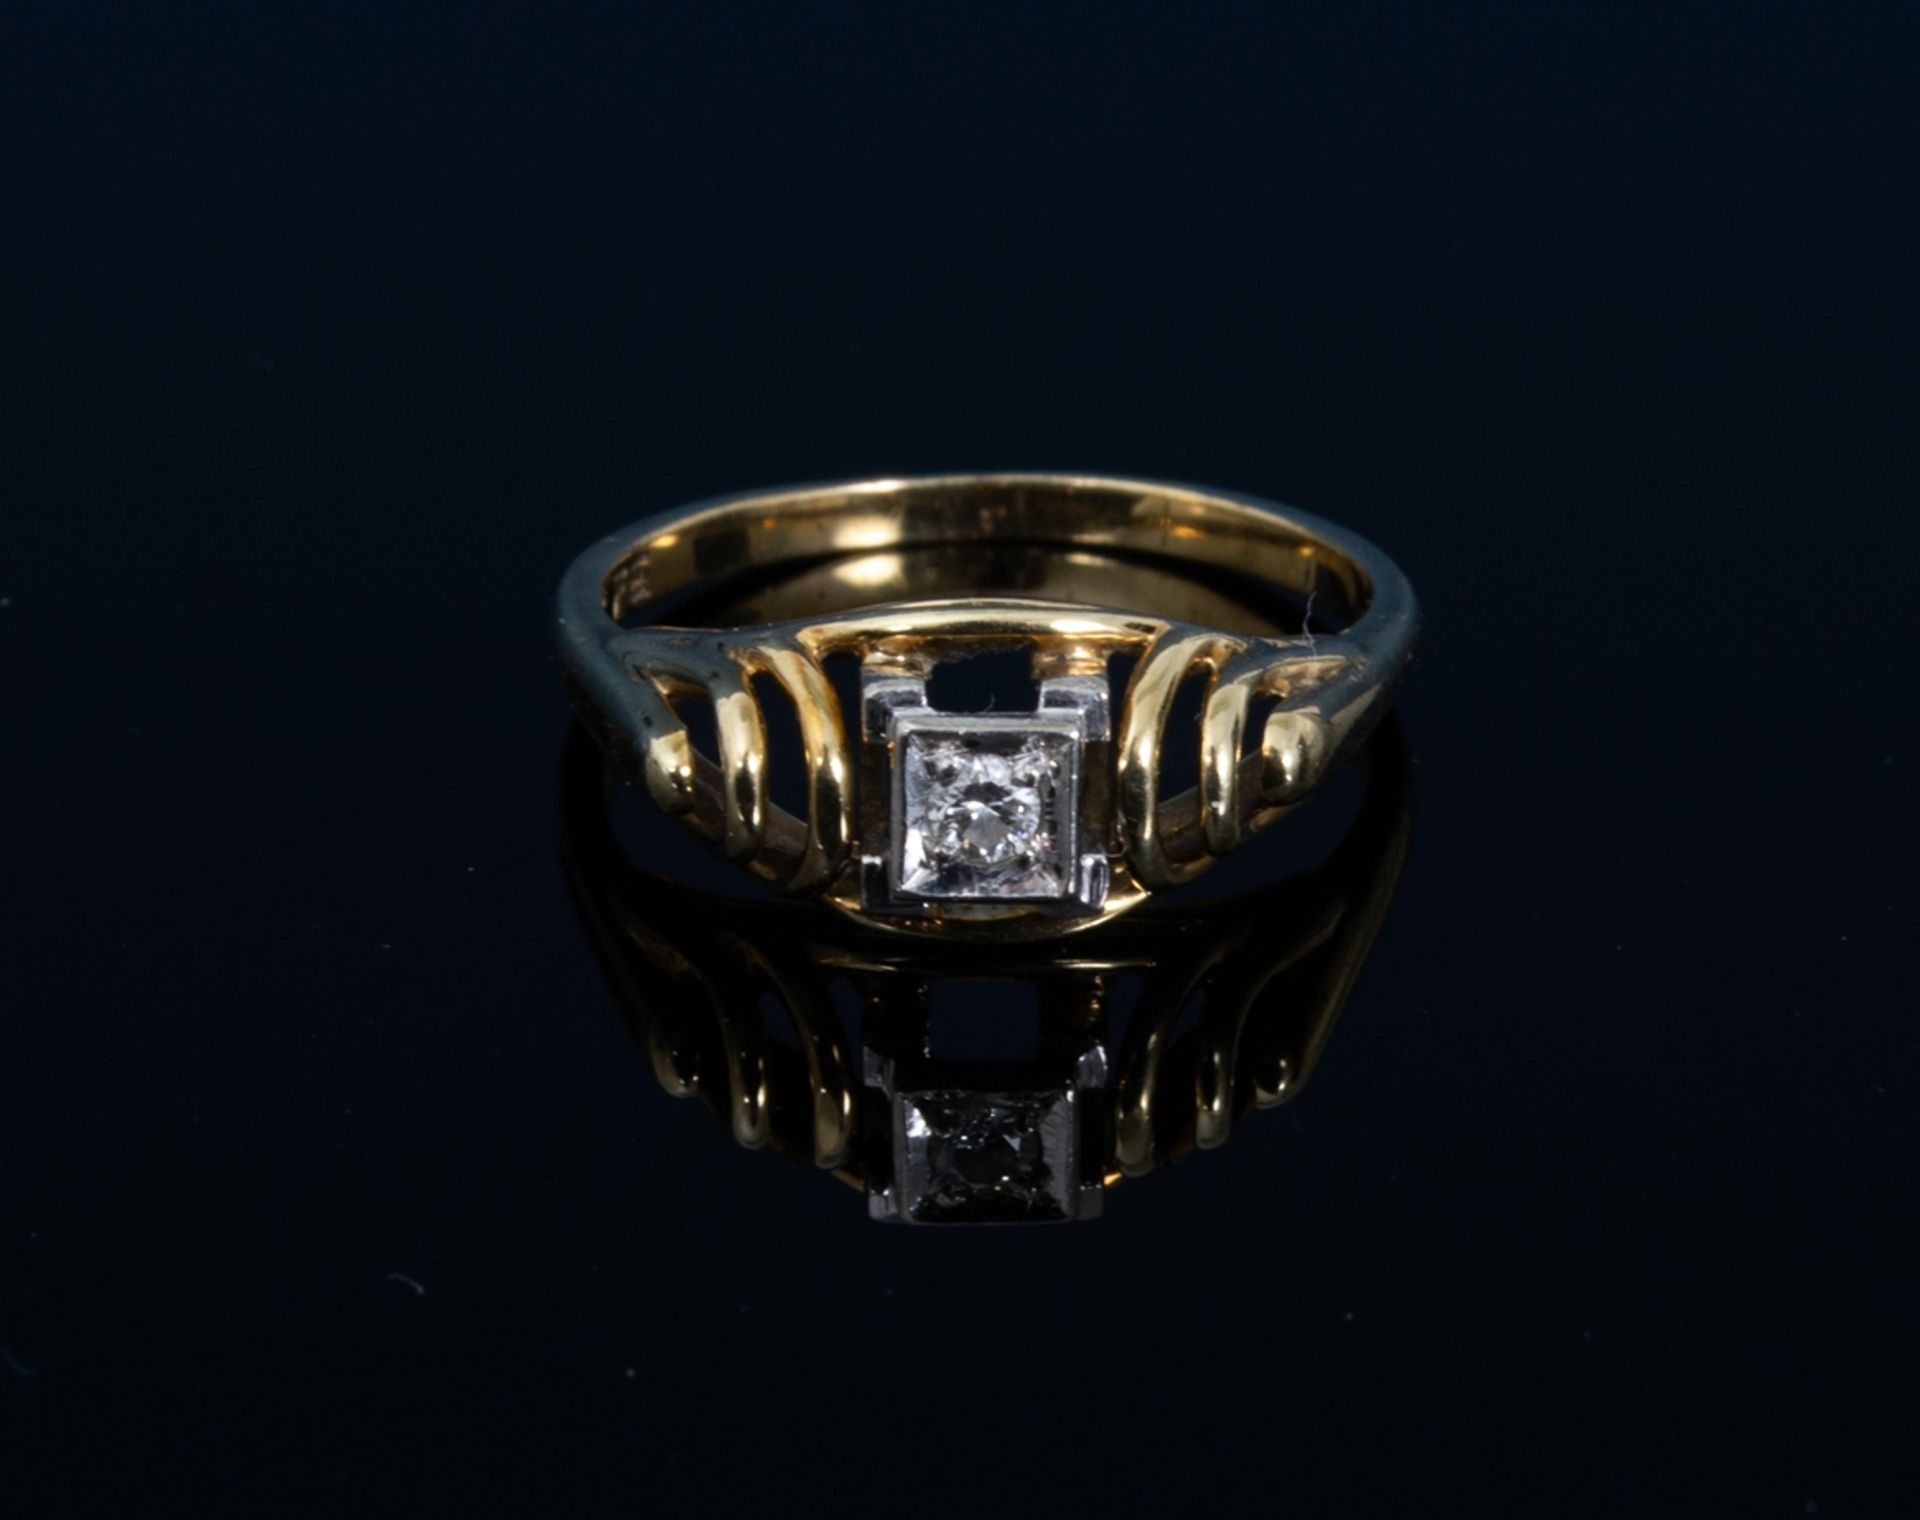 Goldener Ring mit Diamant besetzt, 585er Gelbgold, Diamant ca. 0,1 ct. Ringinnendurchmesser ca. 17 - Image 3 of 6